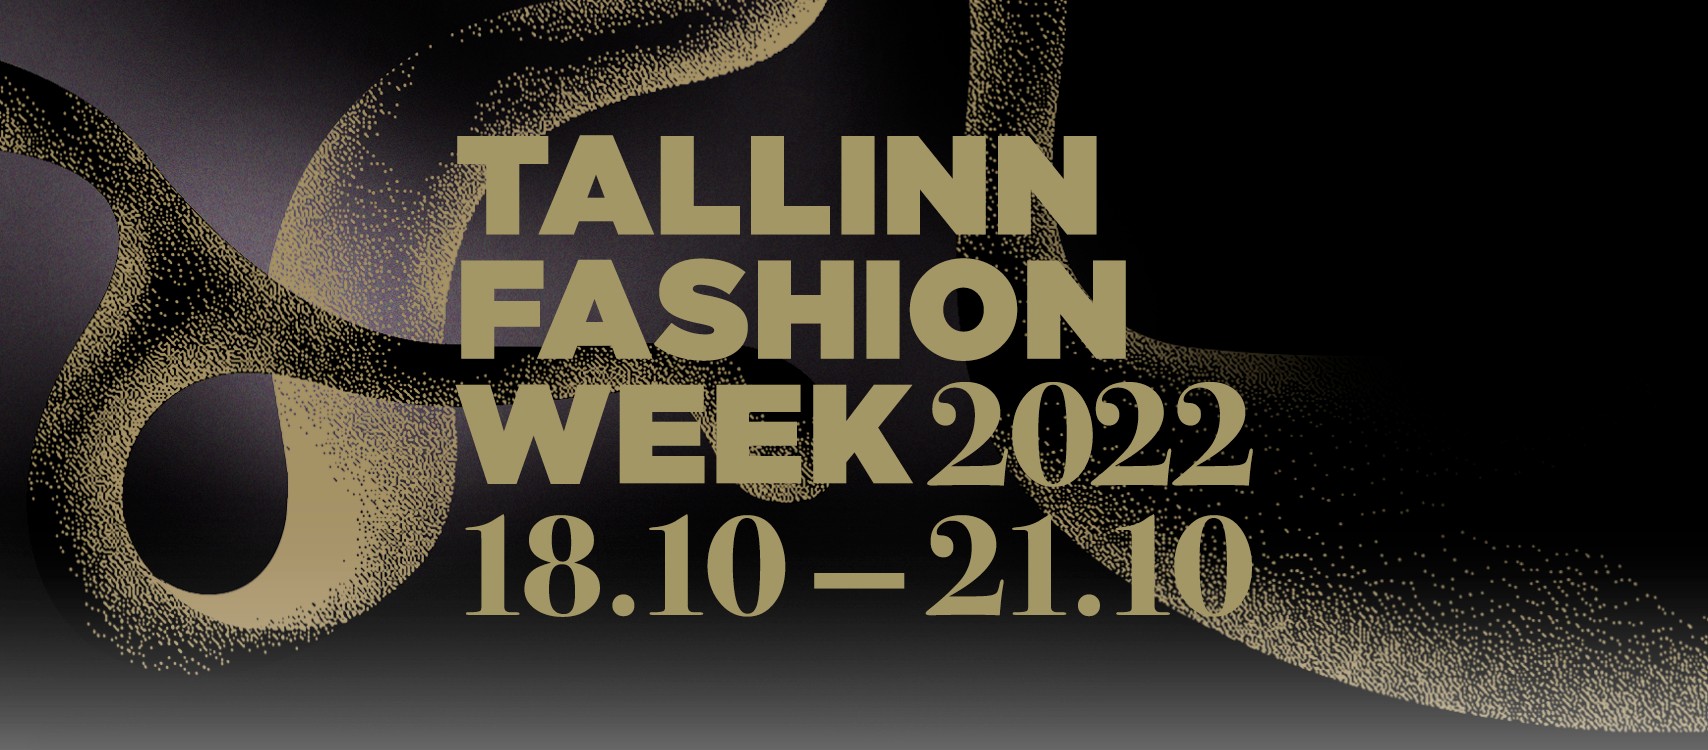 14951Tallinn Fashion Week 2022